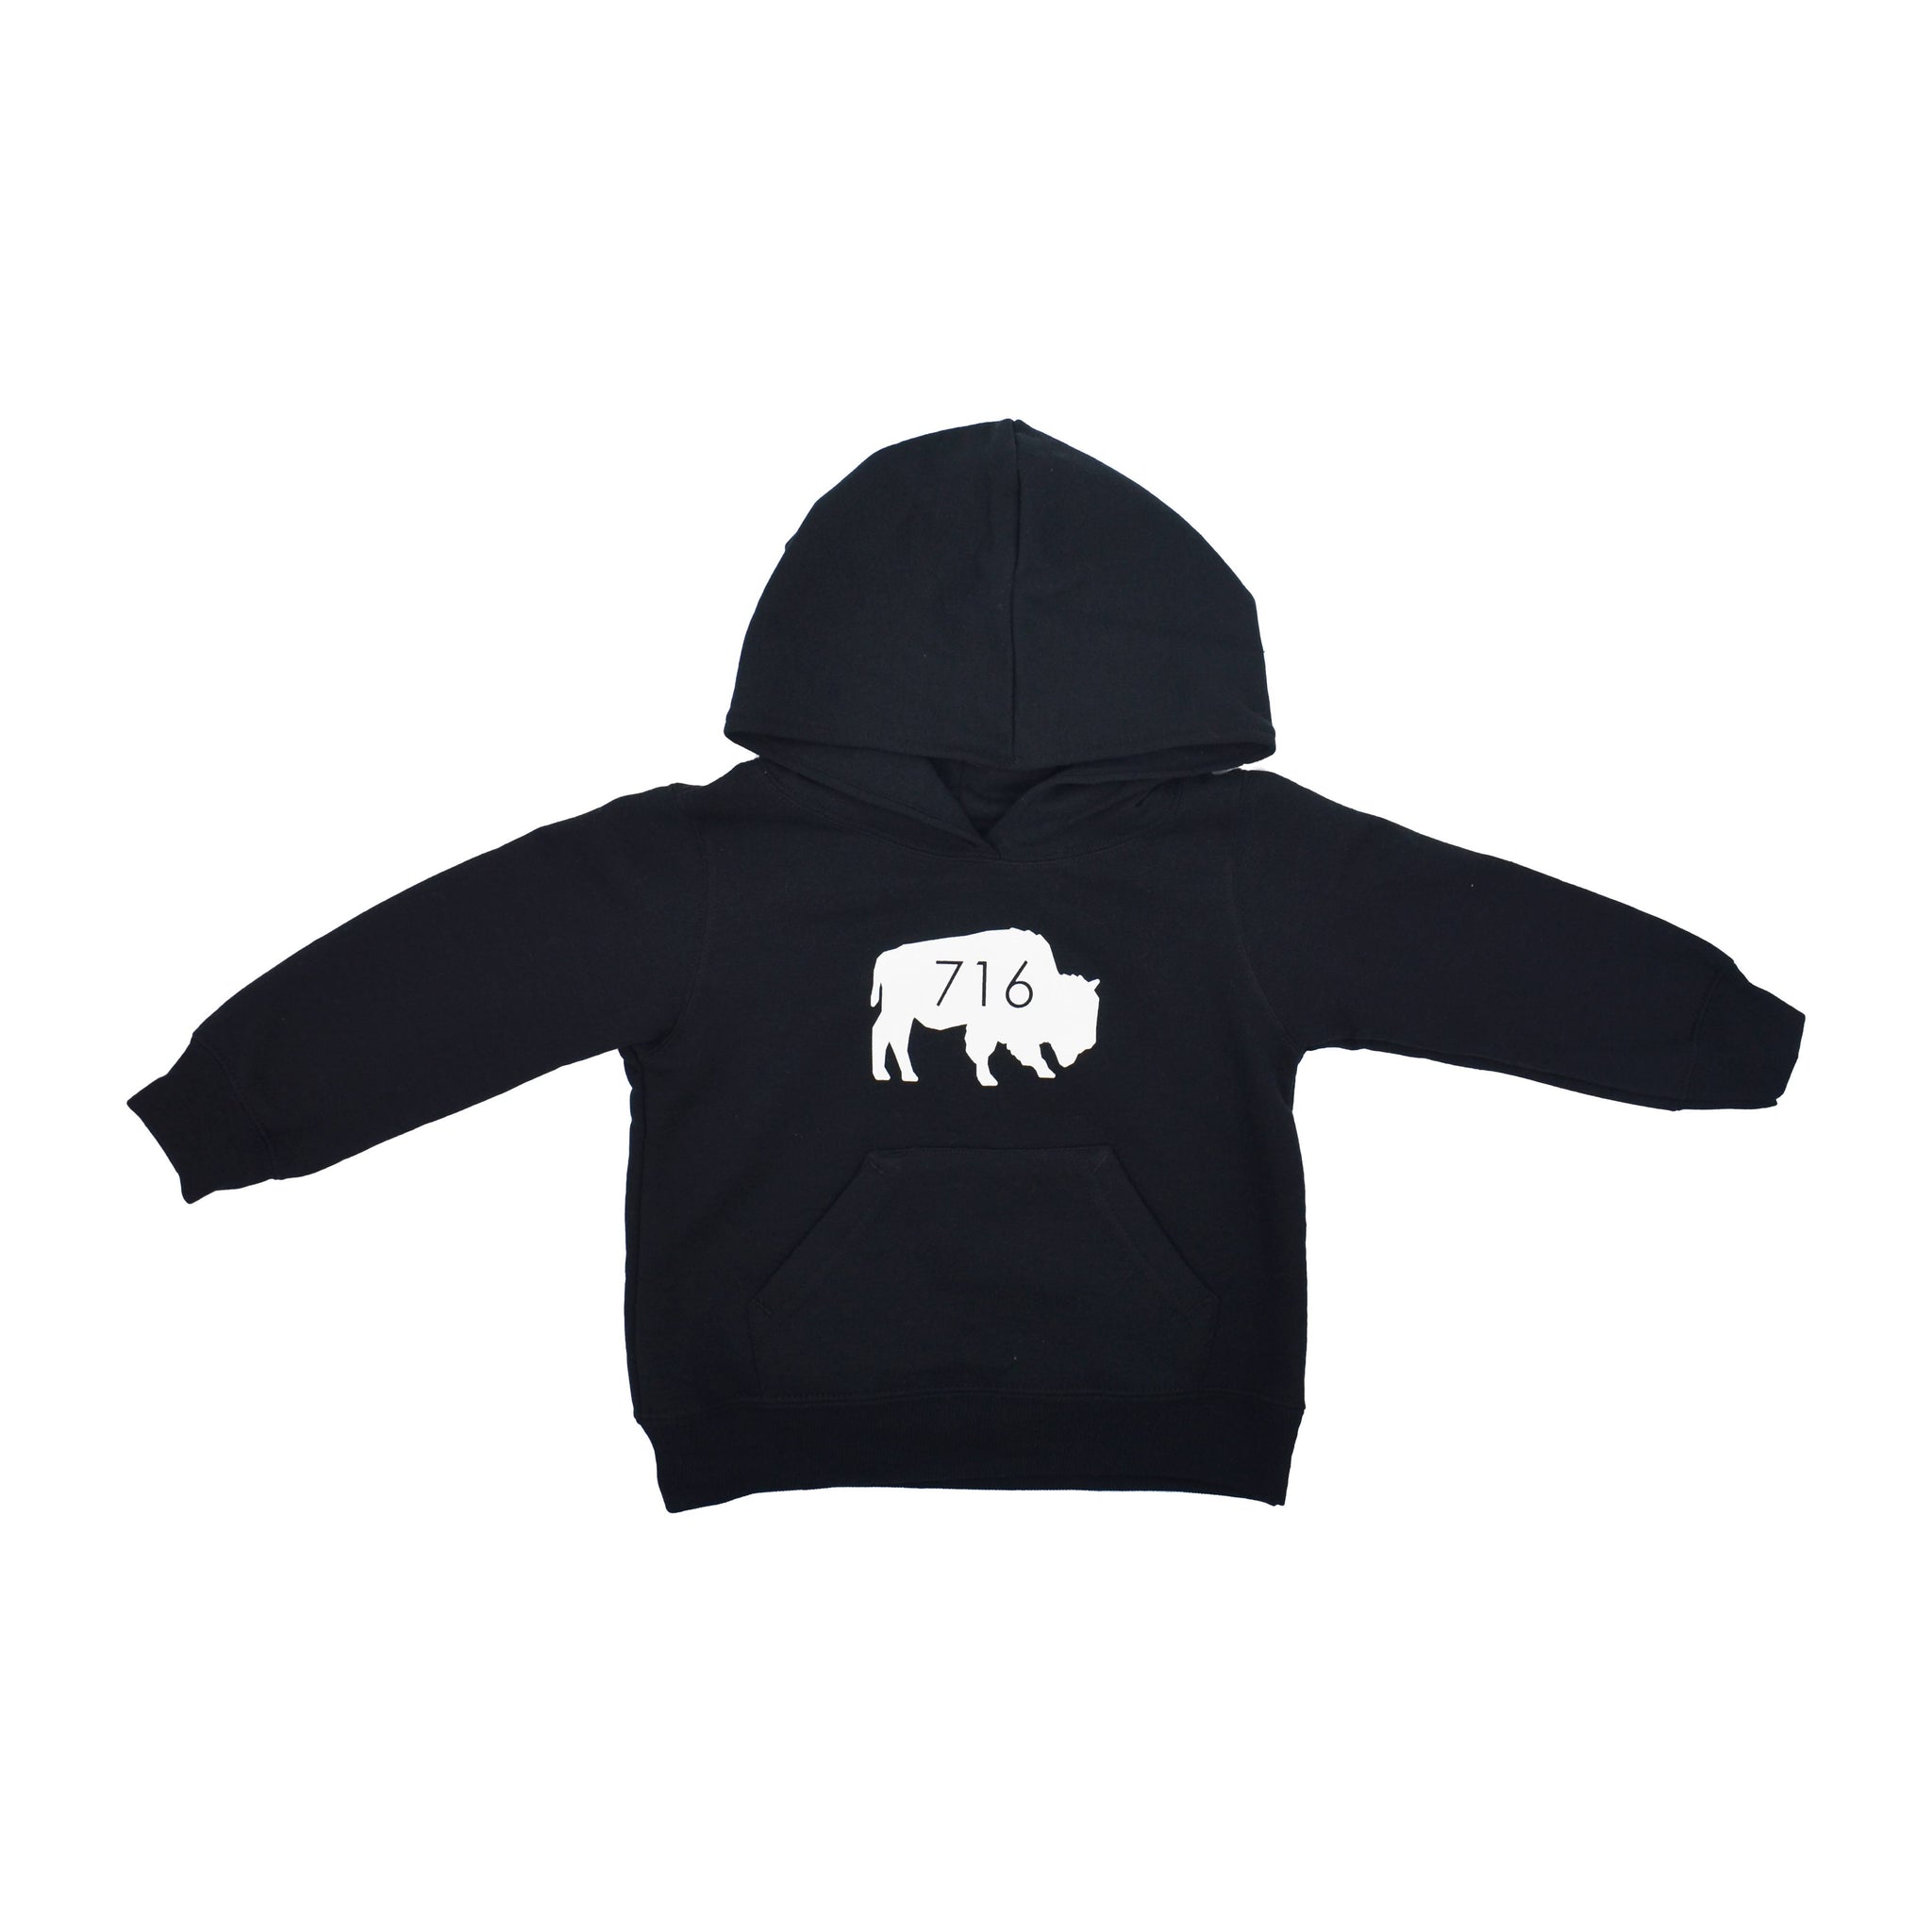 BFLO Buffalo black 716 toddler hoodie sweatshirt